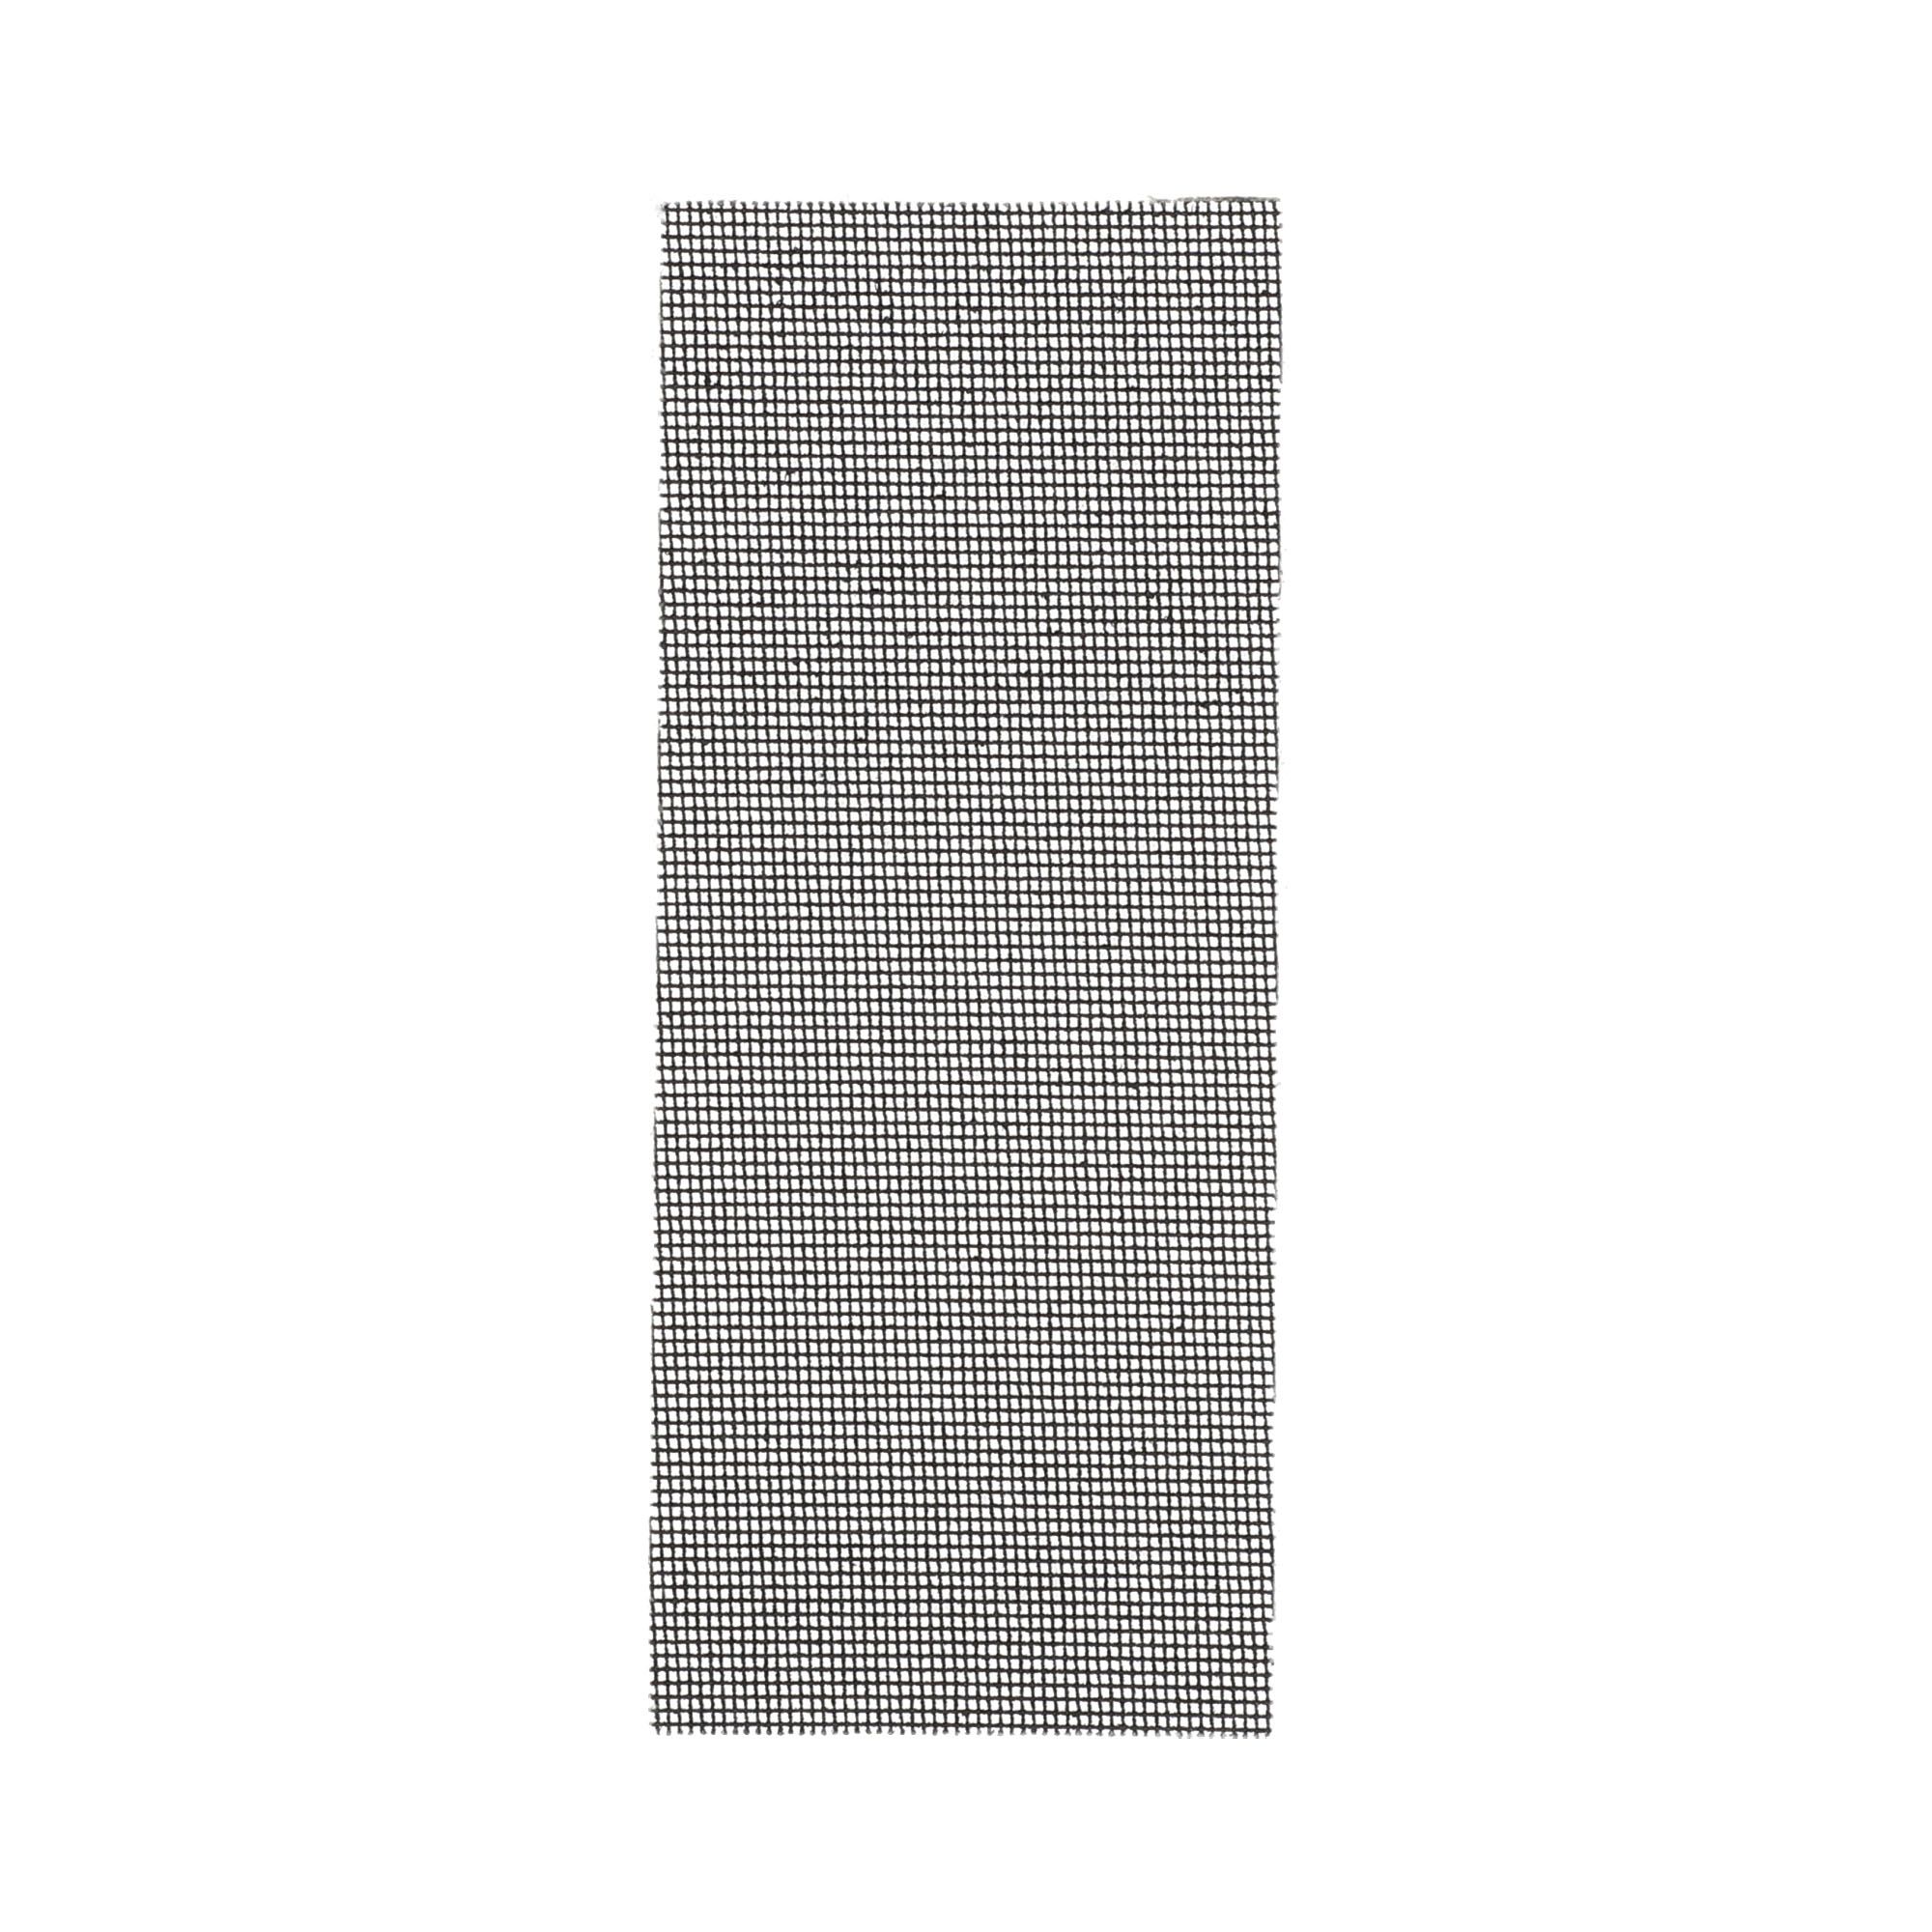 Norton (02316) Iron Shape Sanding Sheet for Black and Decker